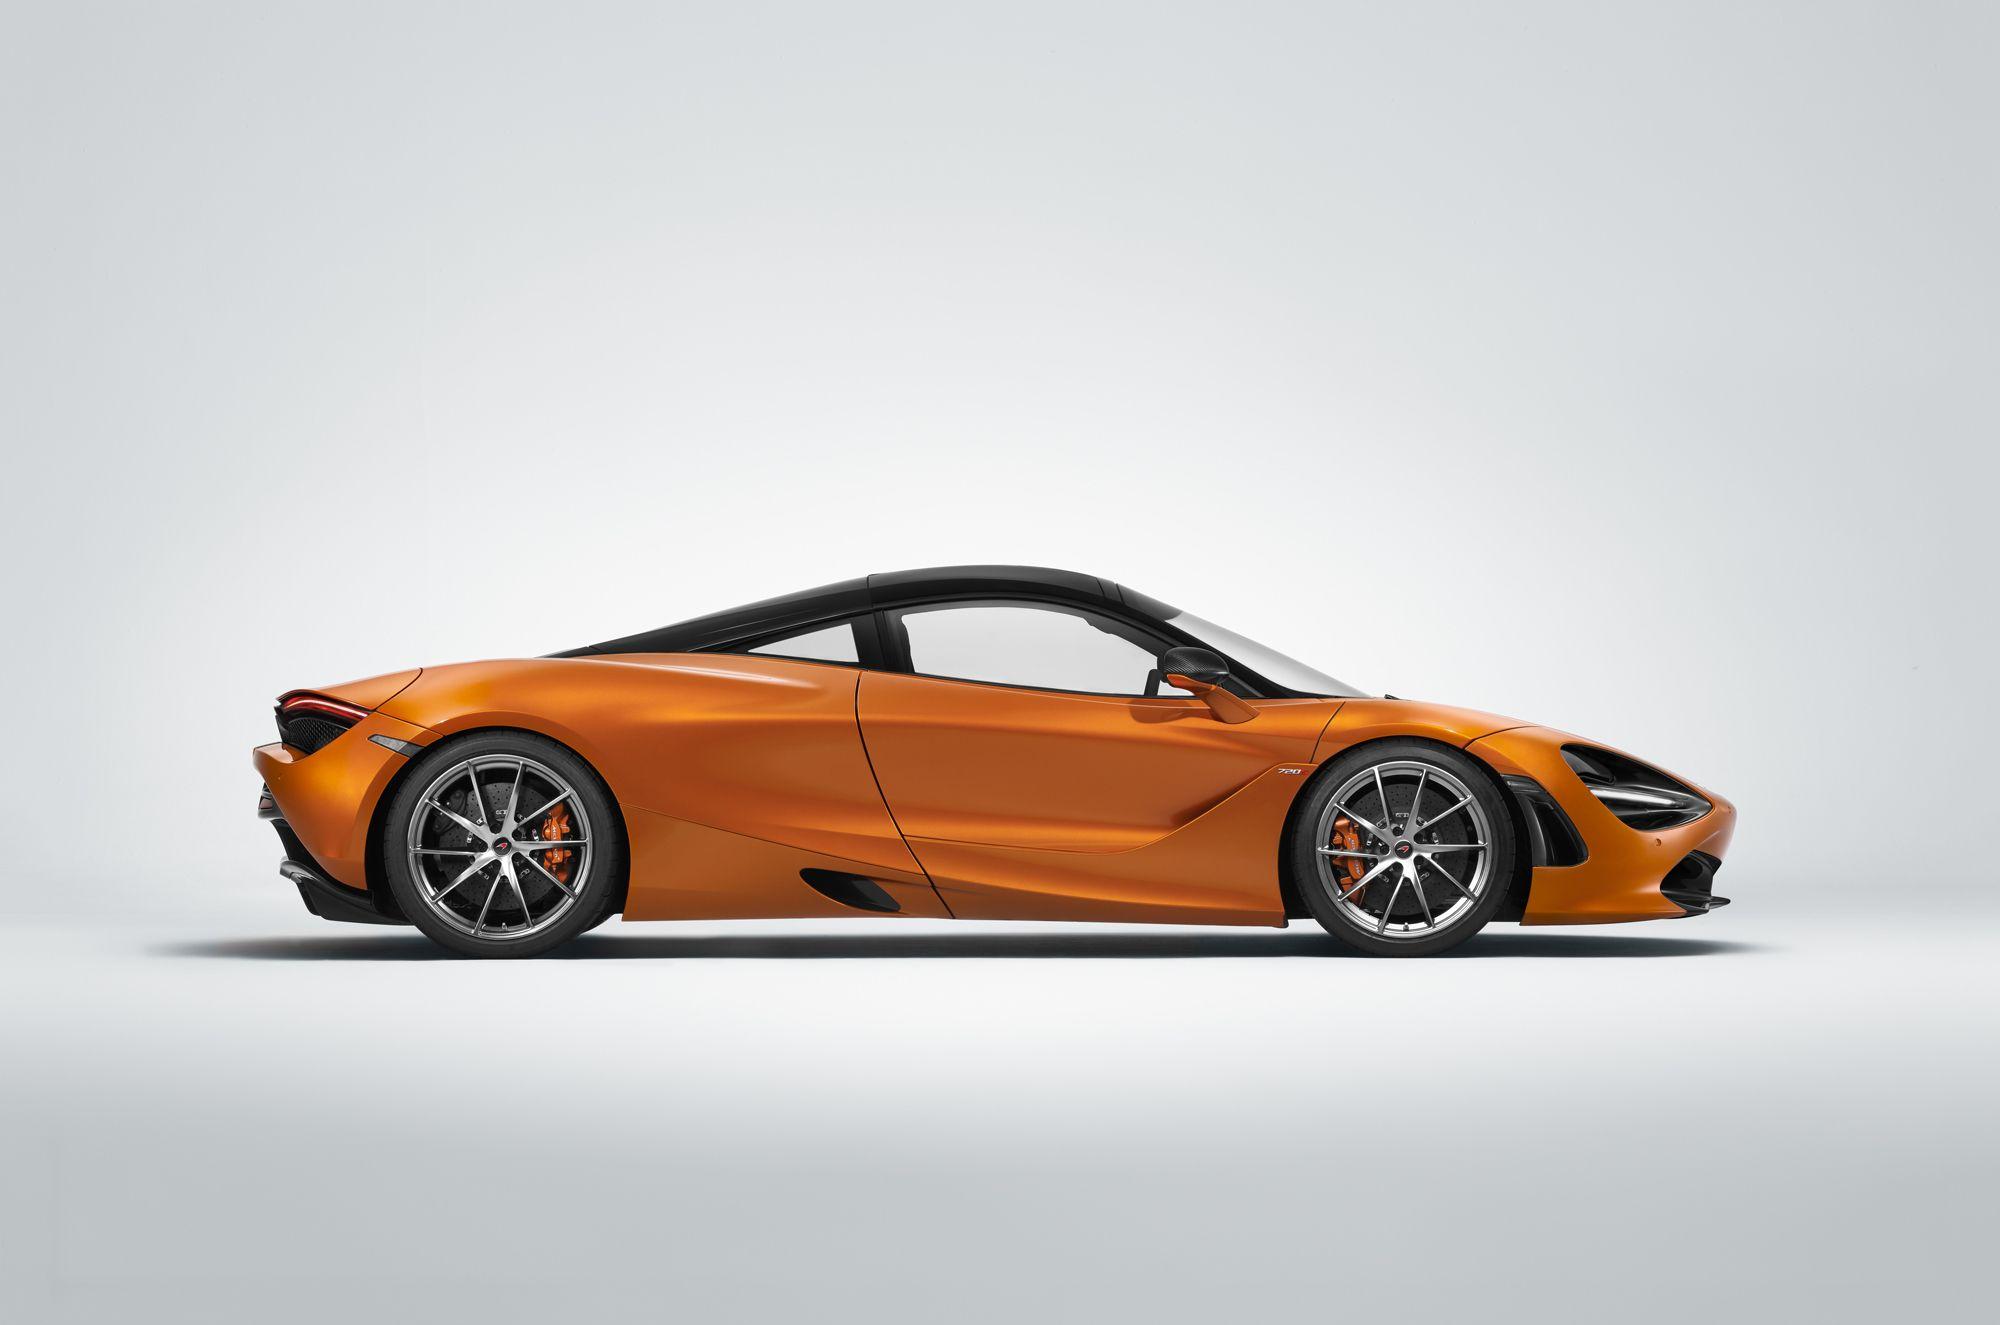 McLaren 720S Wallpaper Image Photo Picture Background